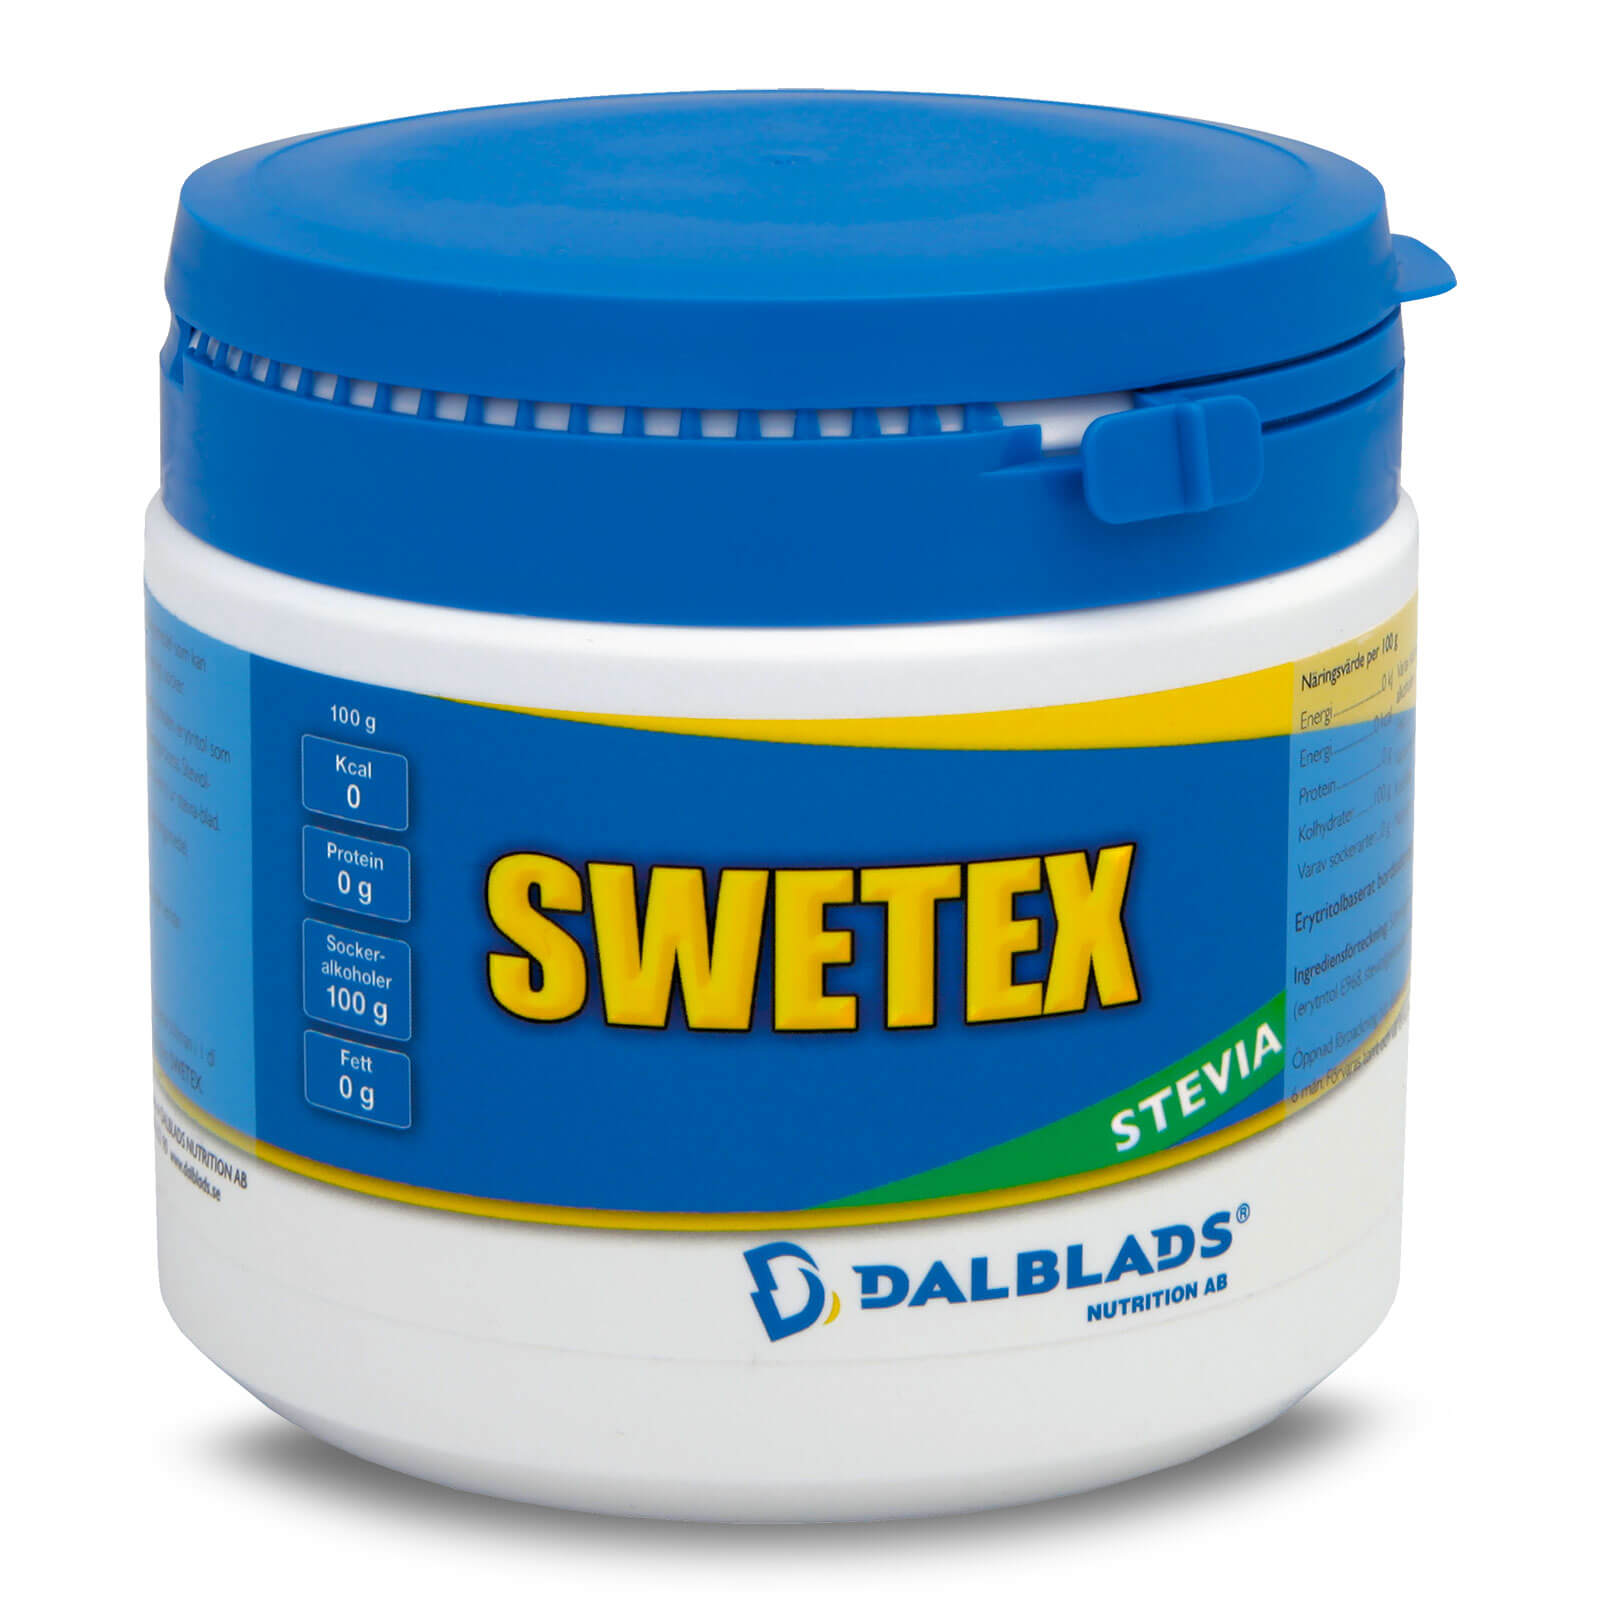 Swetex, Dalblads, 0,5 dl